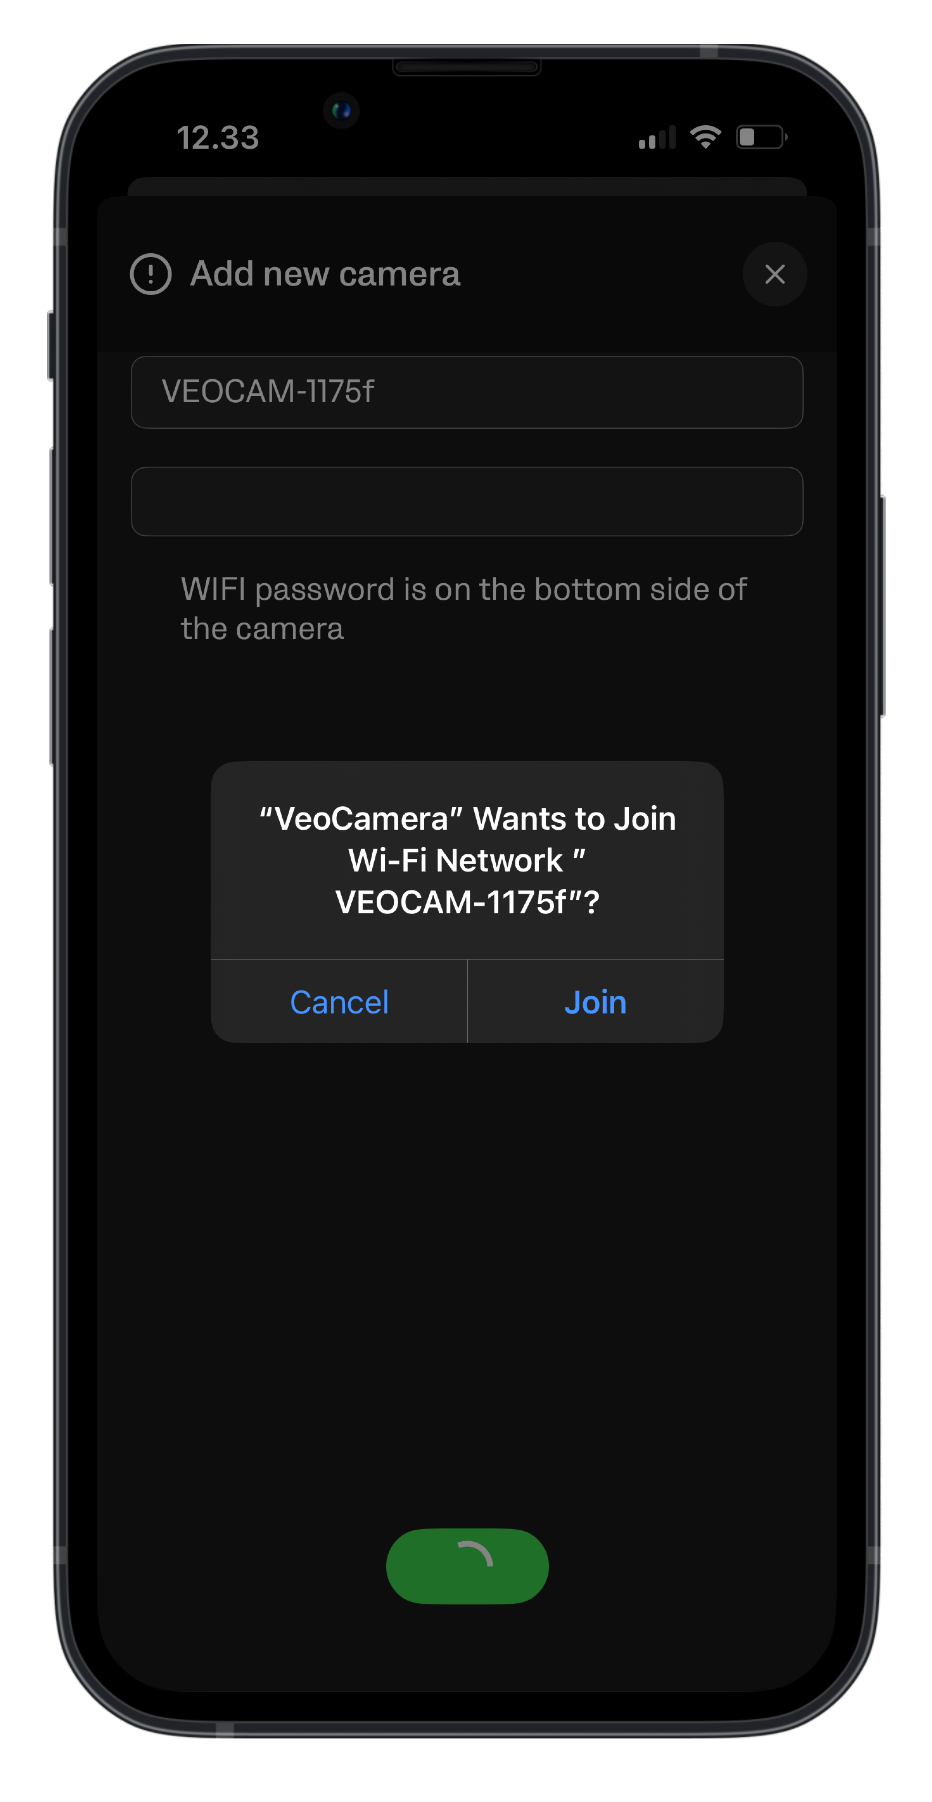 connexion wi-fi VC1.png